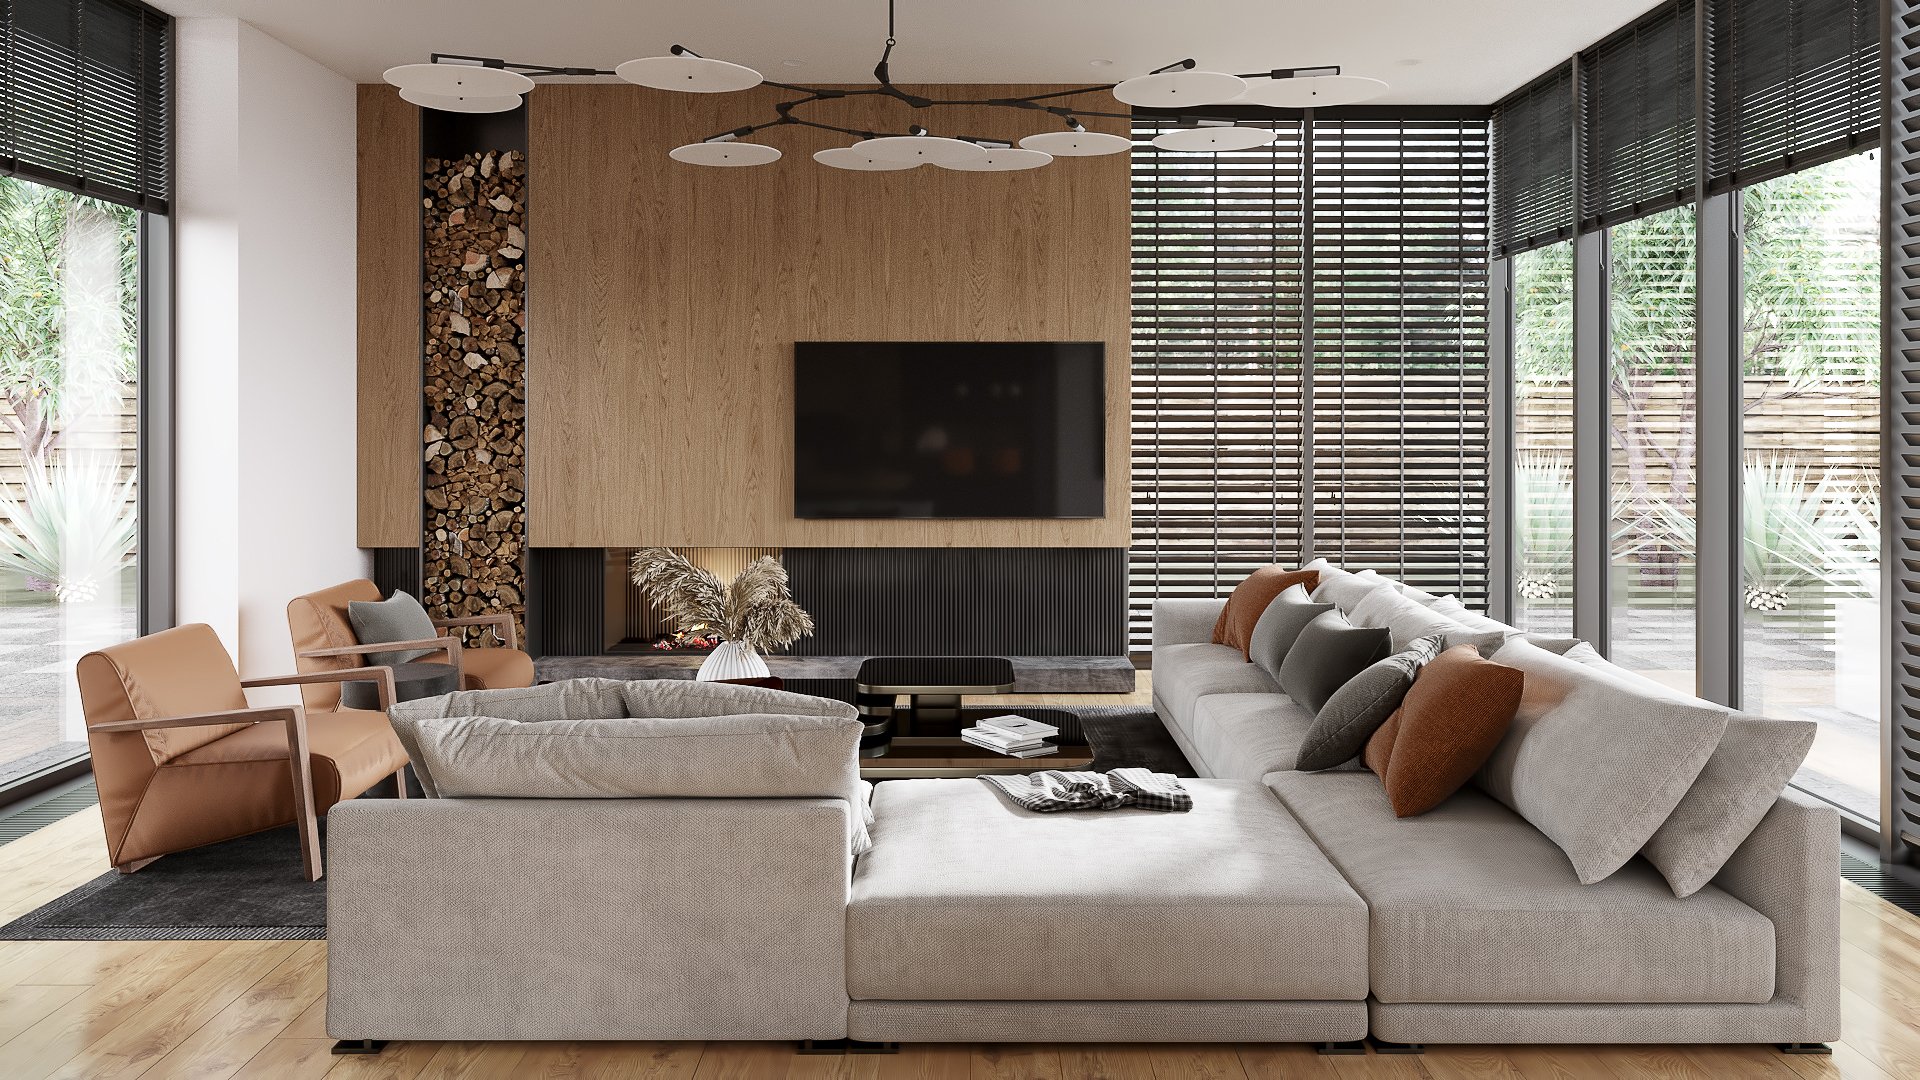 CG Rendering for a Living Room Design Presentation